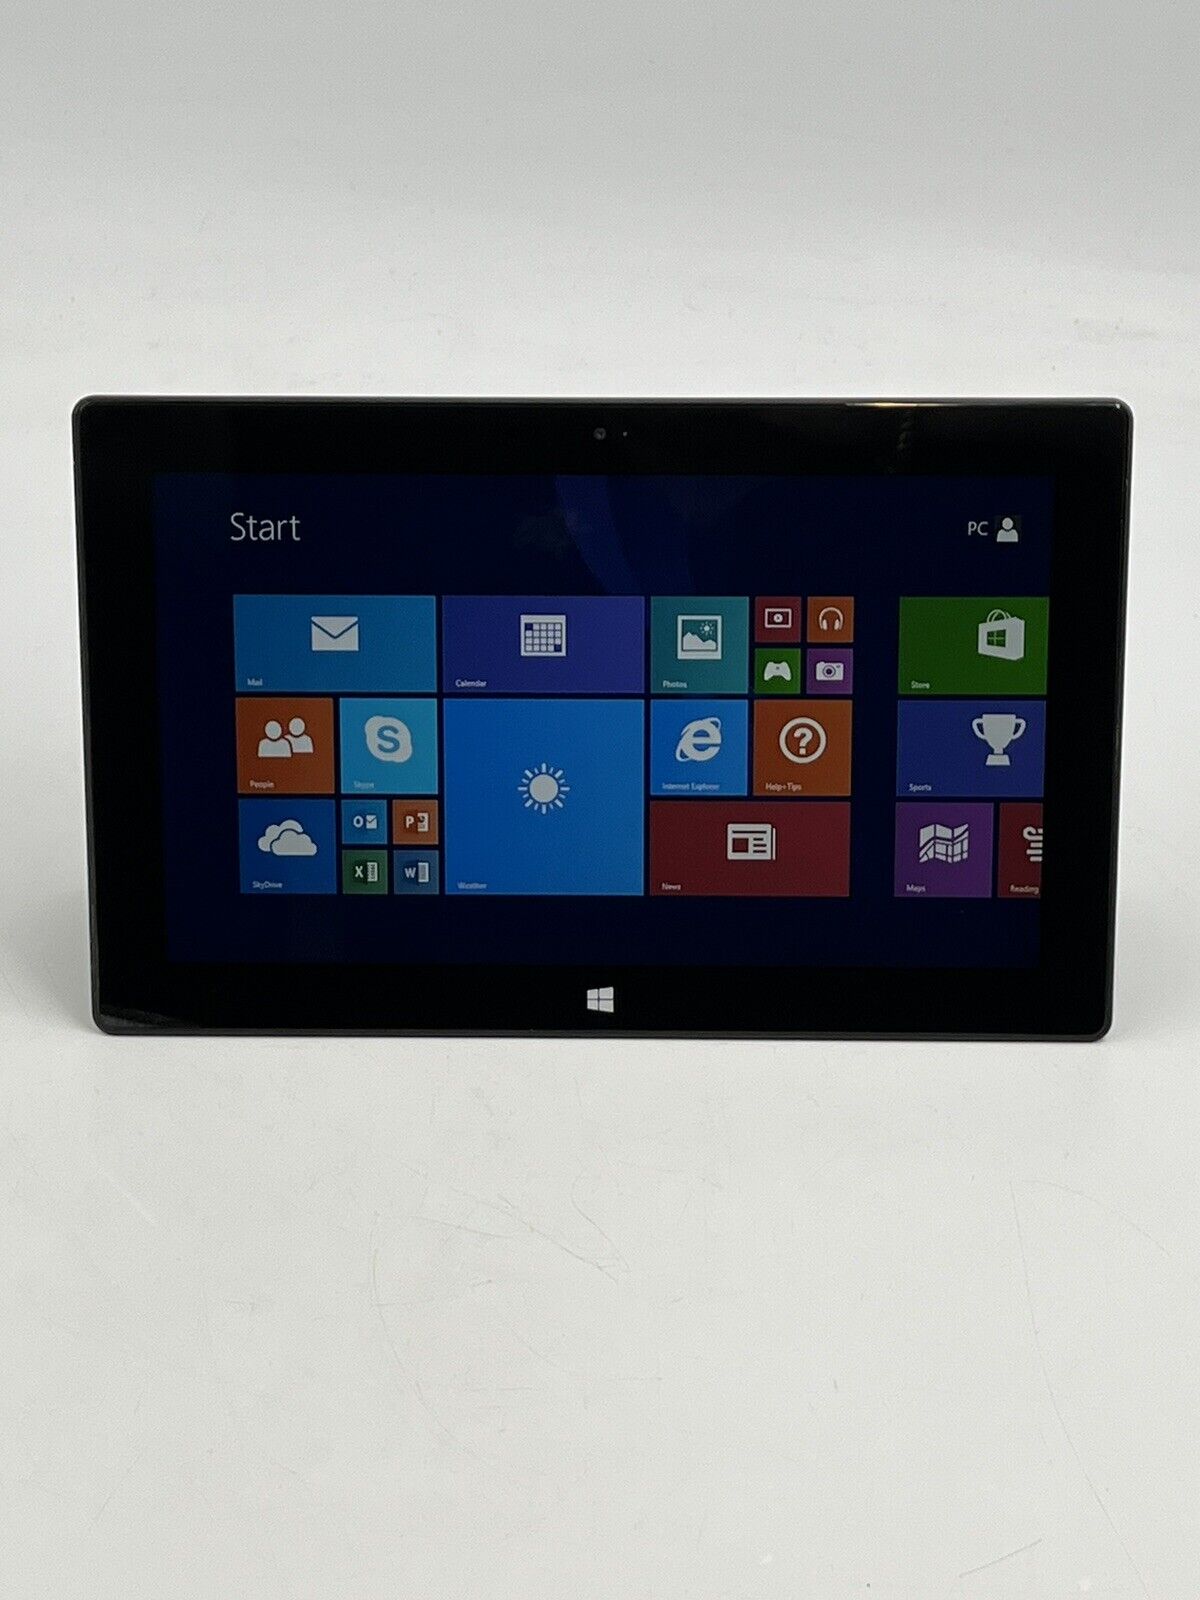 Microsoft Surface RT 8.1 Tablet, Model 1516, NVIDIA TEGRA 3 CPU, 1.30 GHz, 32GB